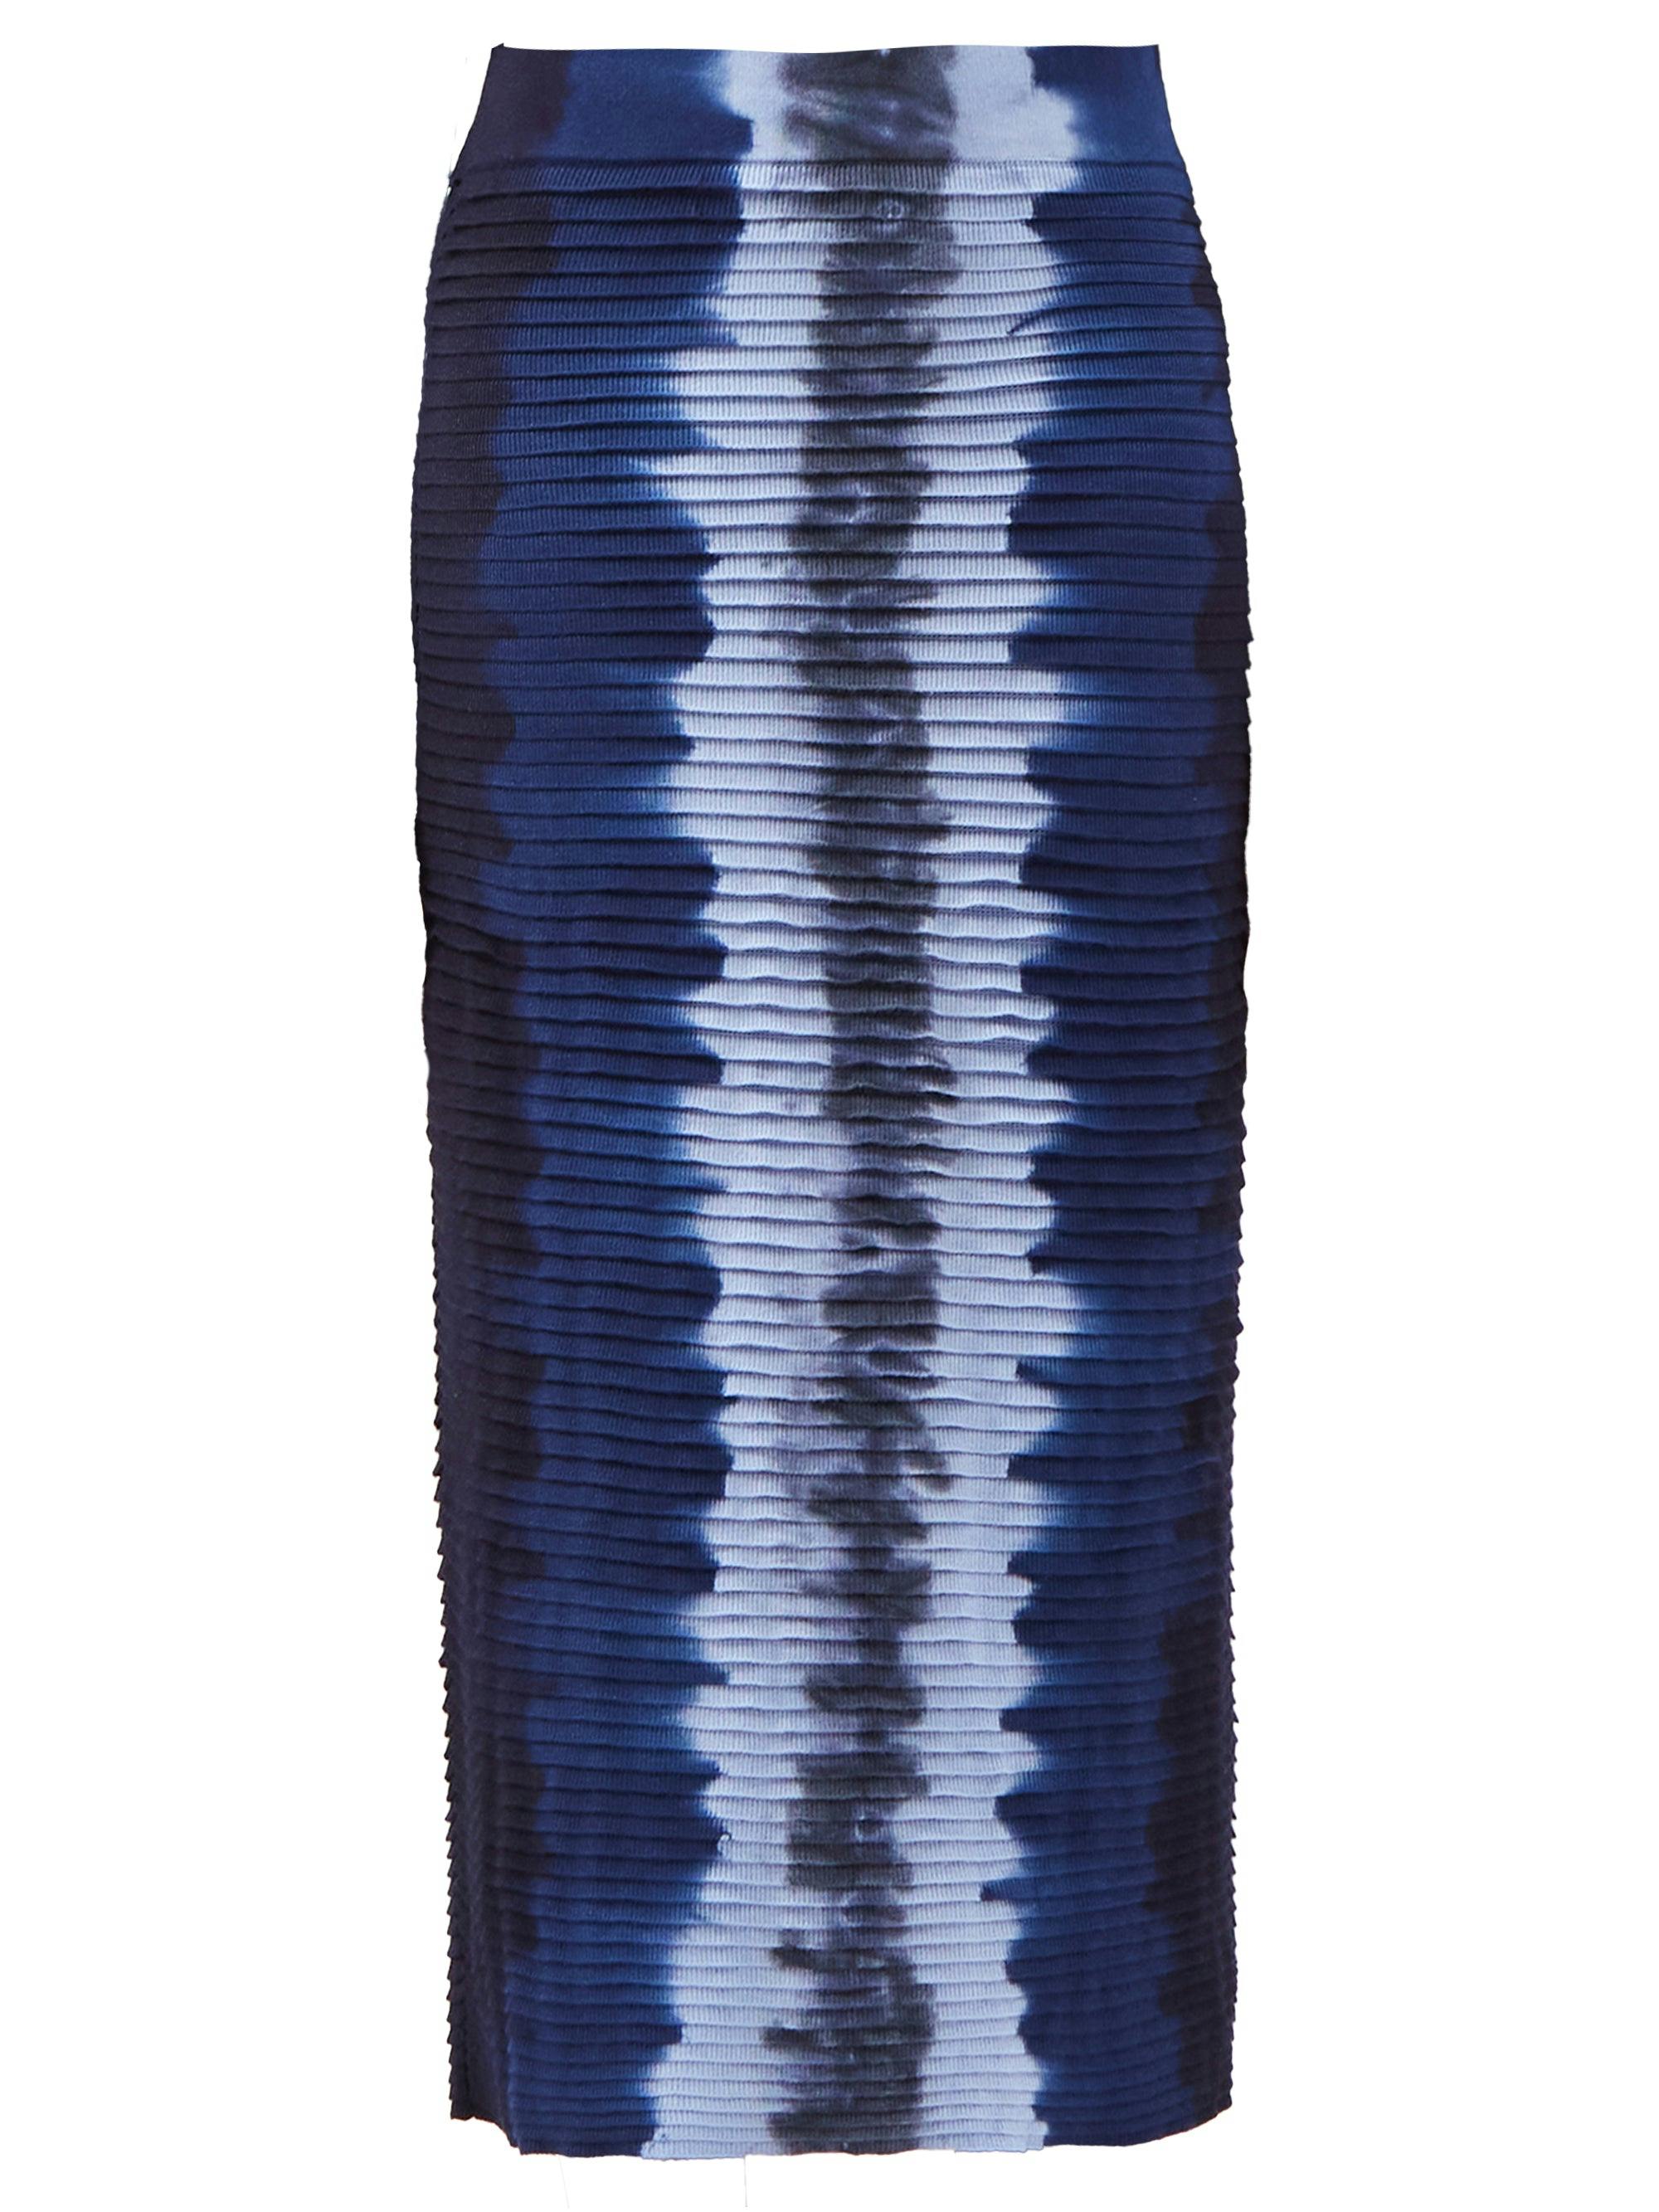 Blue shibori-dyed ribbed skirt